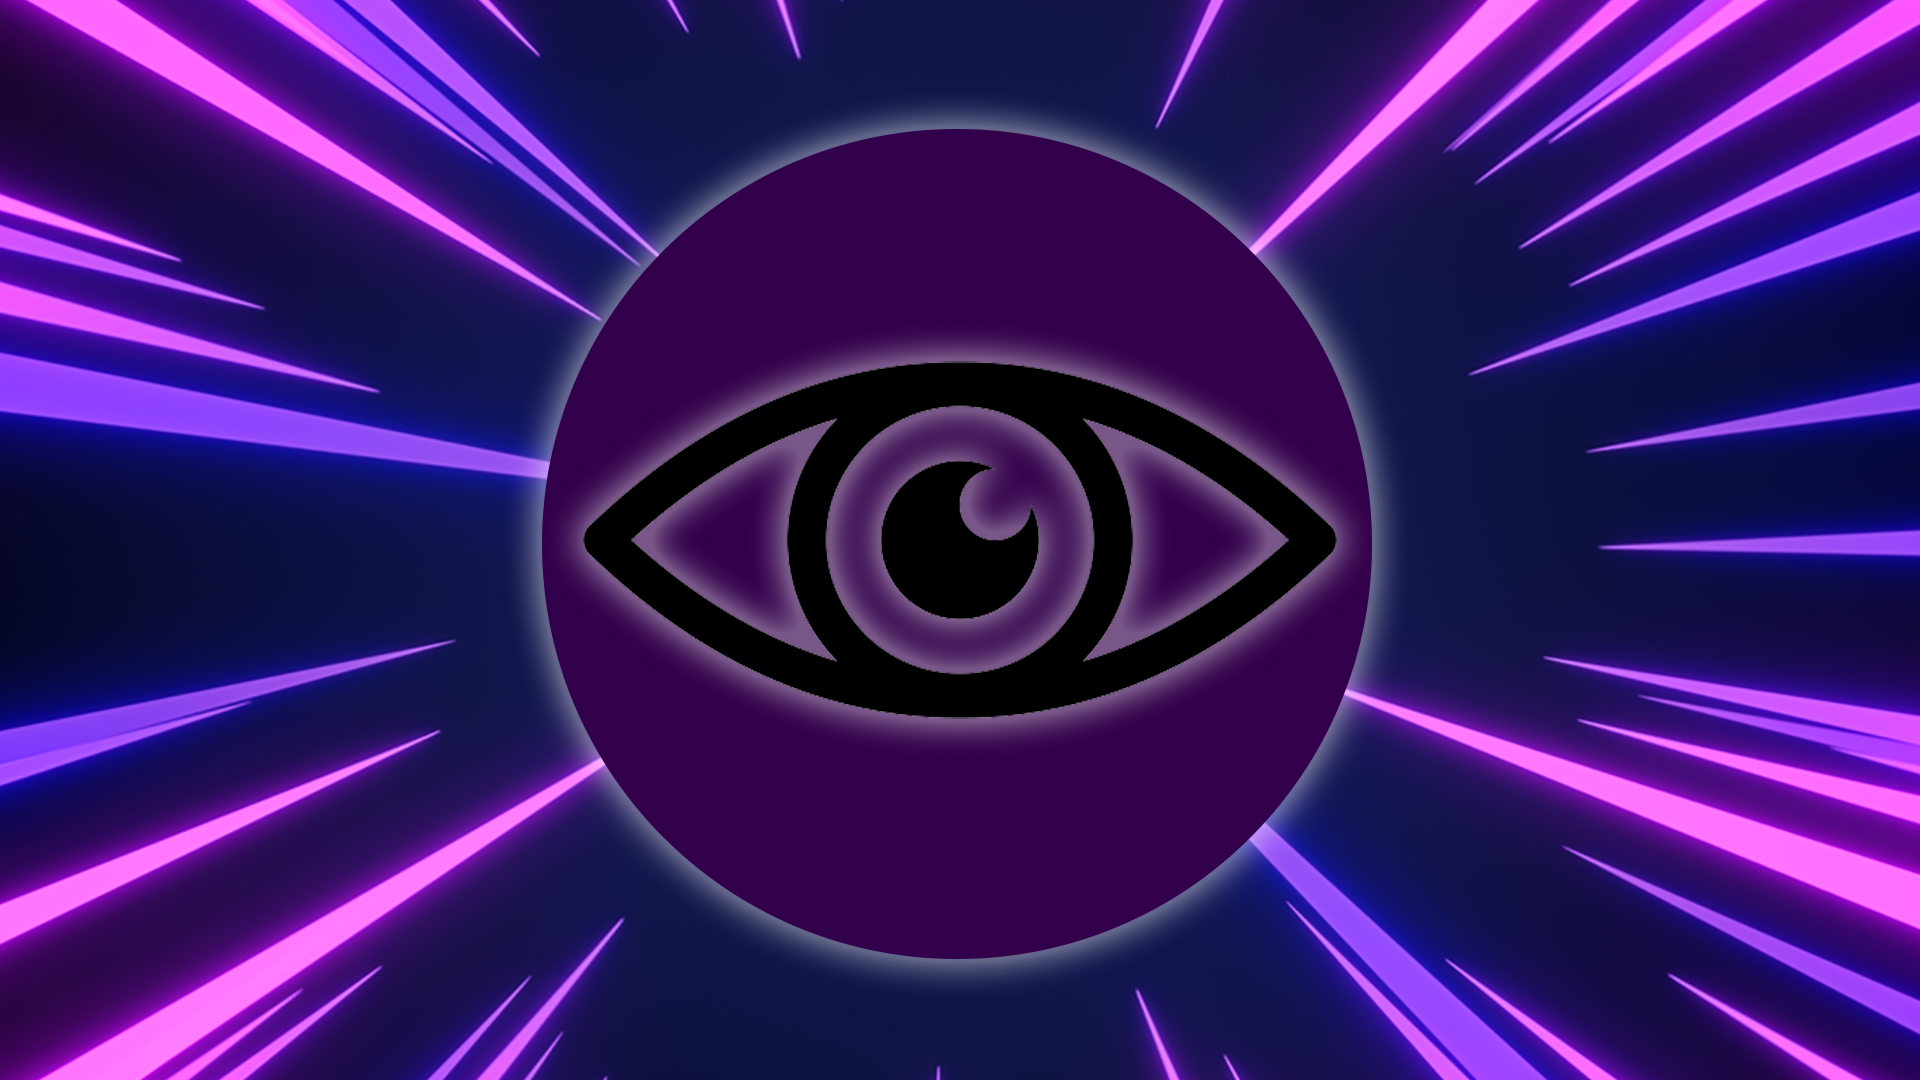 An eye symbol